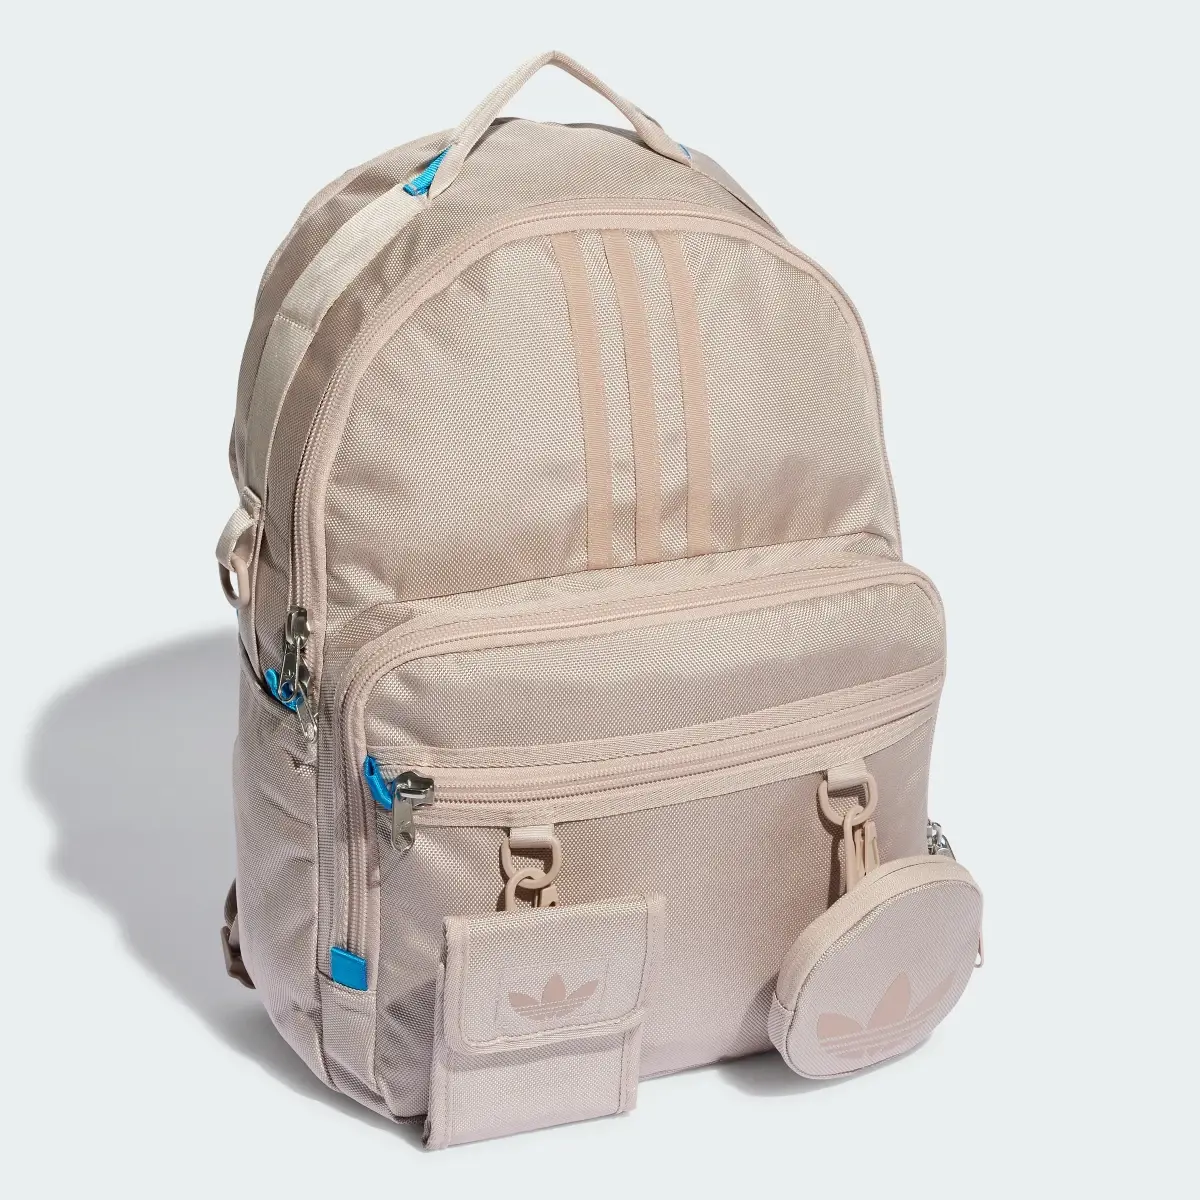 Adidas Originals Utility Backpack. 2